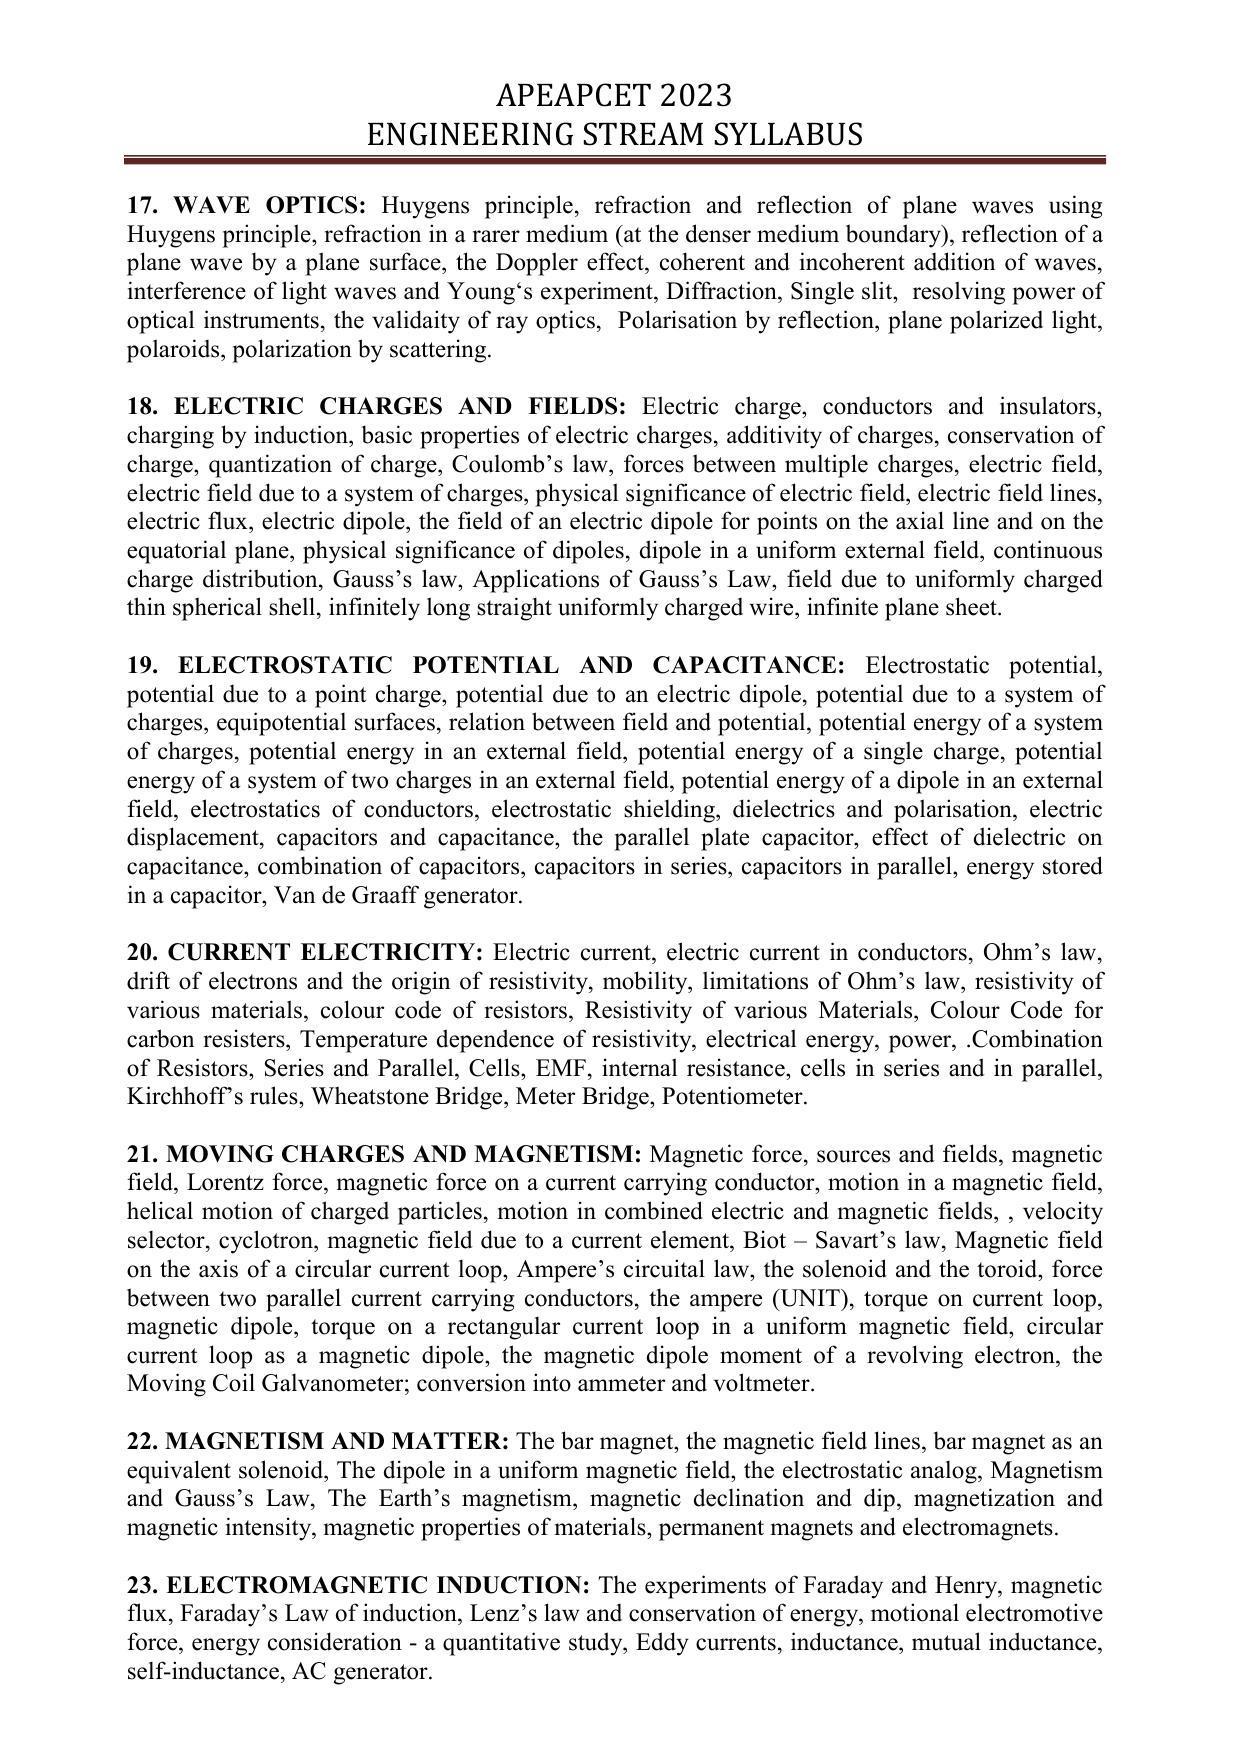 AP EAPCET Engineering Syllabus - Page 6